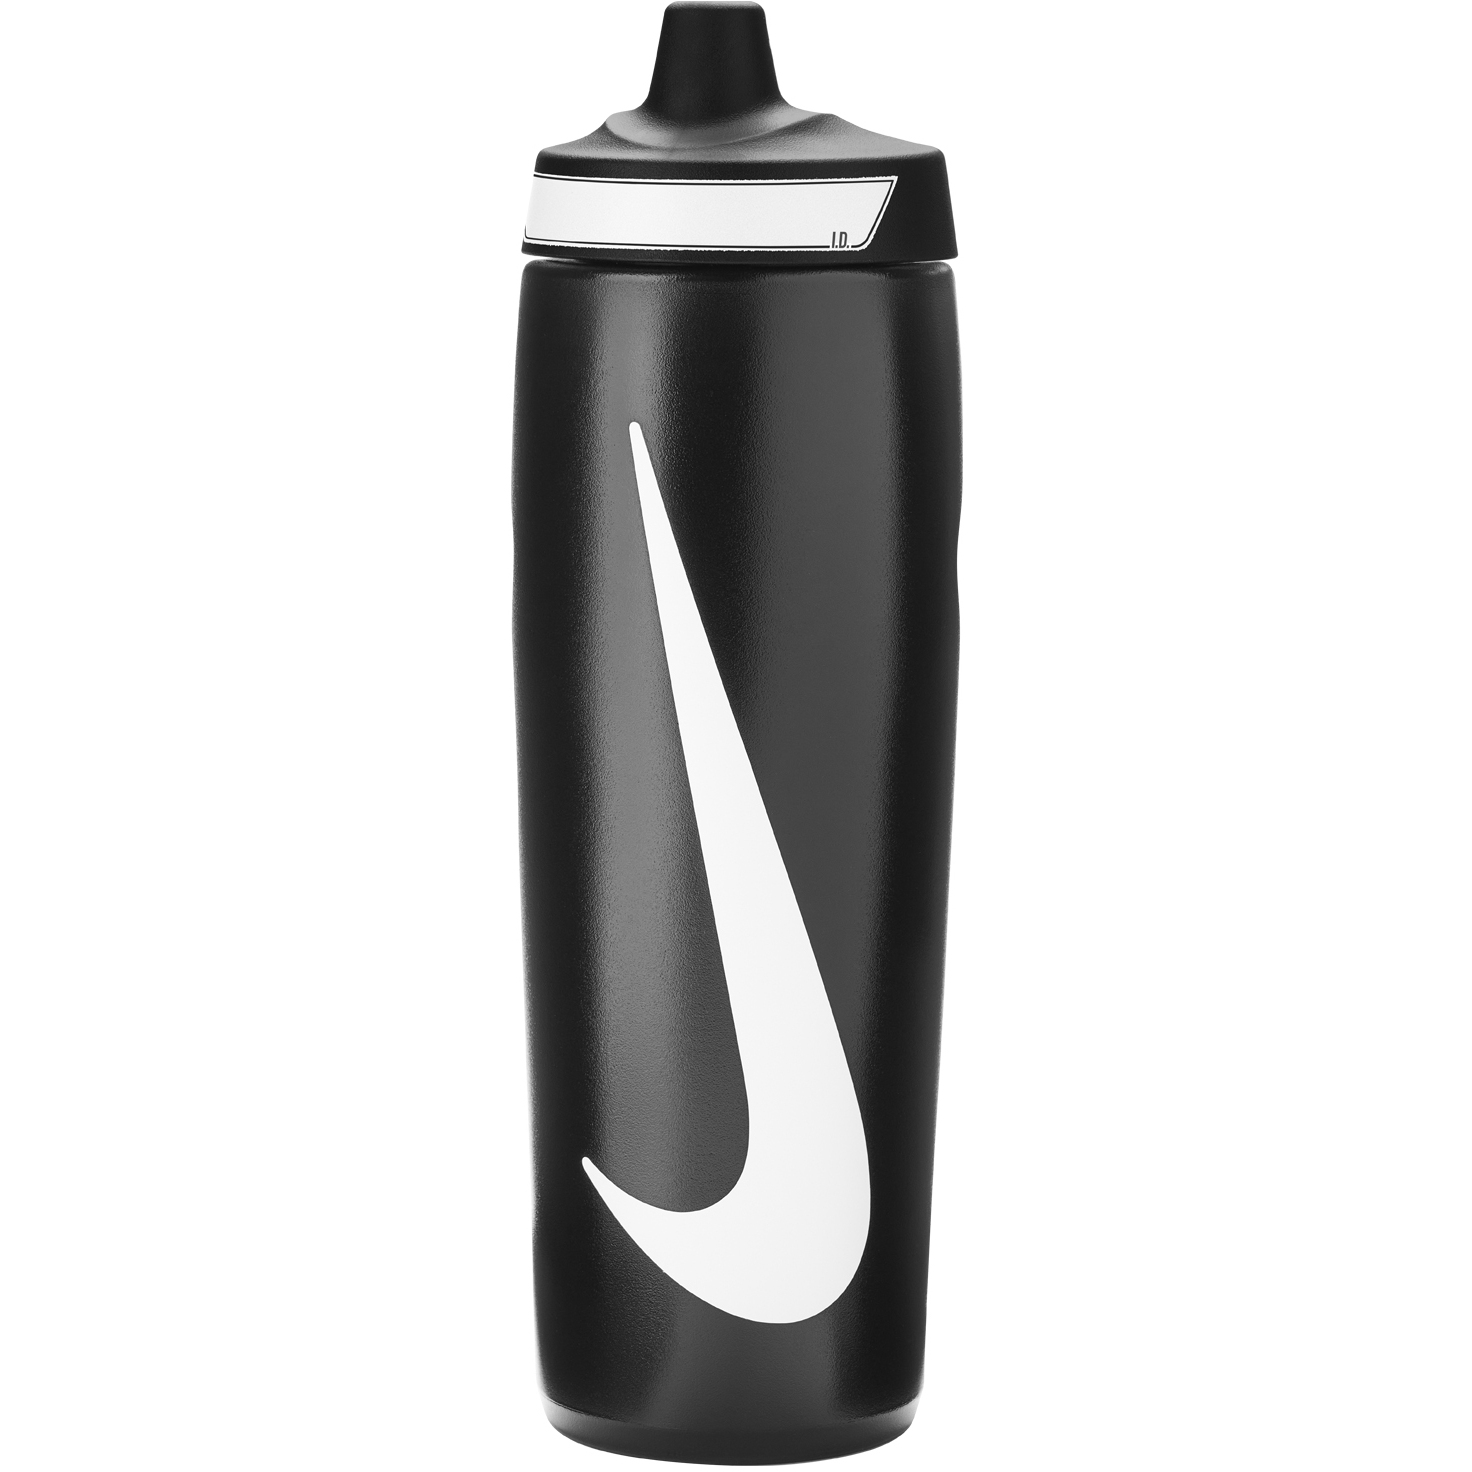 Productfoto van Nike Refuel Bottle Grip Sport-Waterfles 24 oz / 709ml - zwart/zwart/wit 091